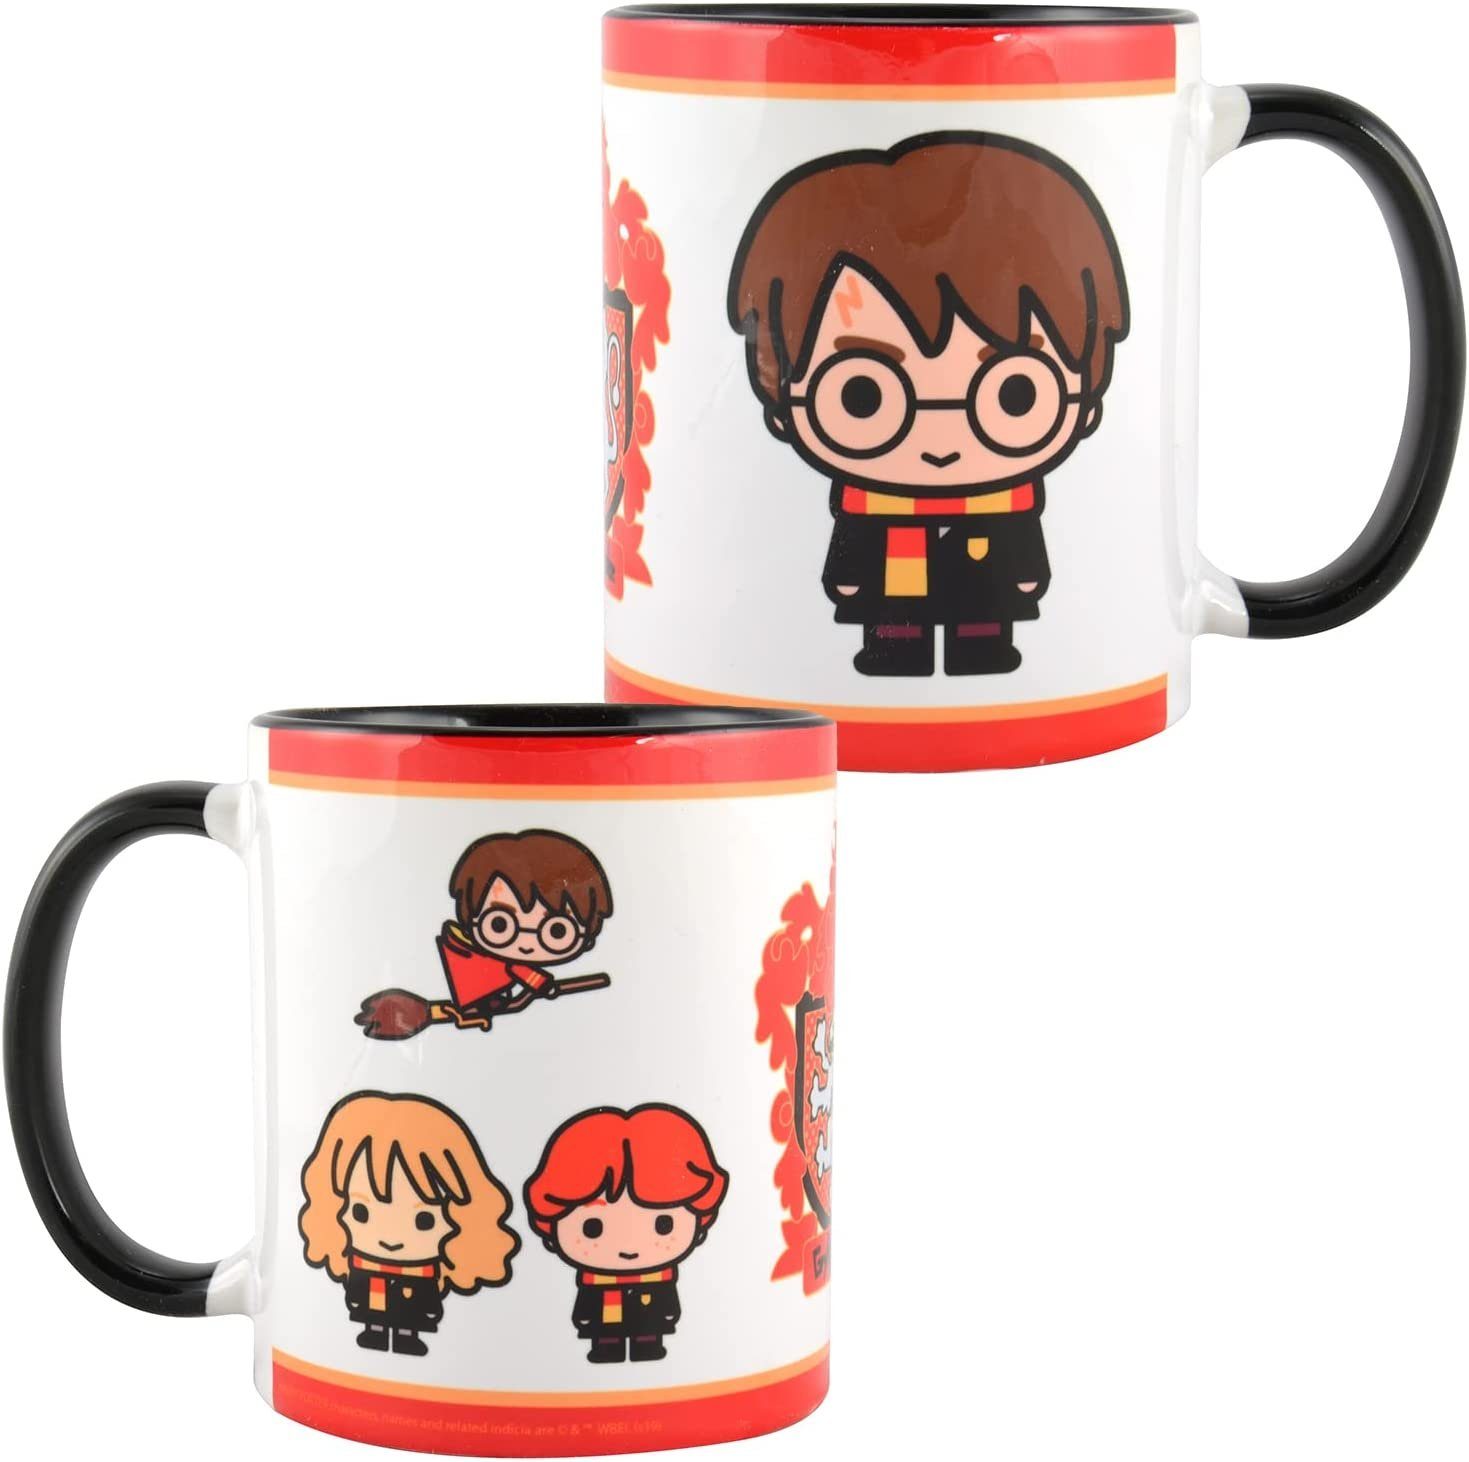 United Labels® Tasse Harry Potter Tasse - 3 Freunde Gryffindor Weiß Rot 320 ml, Keramik